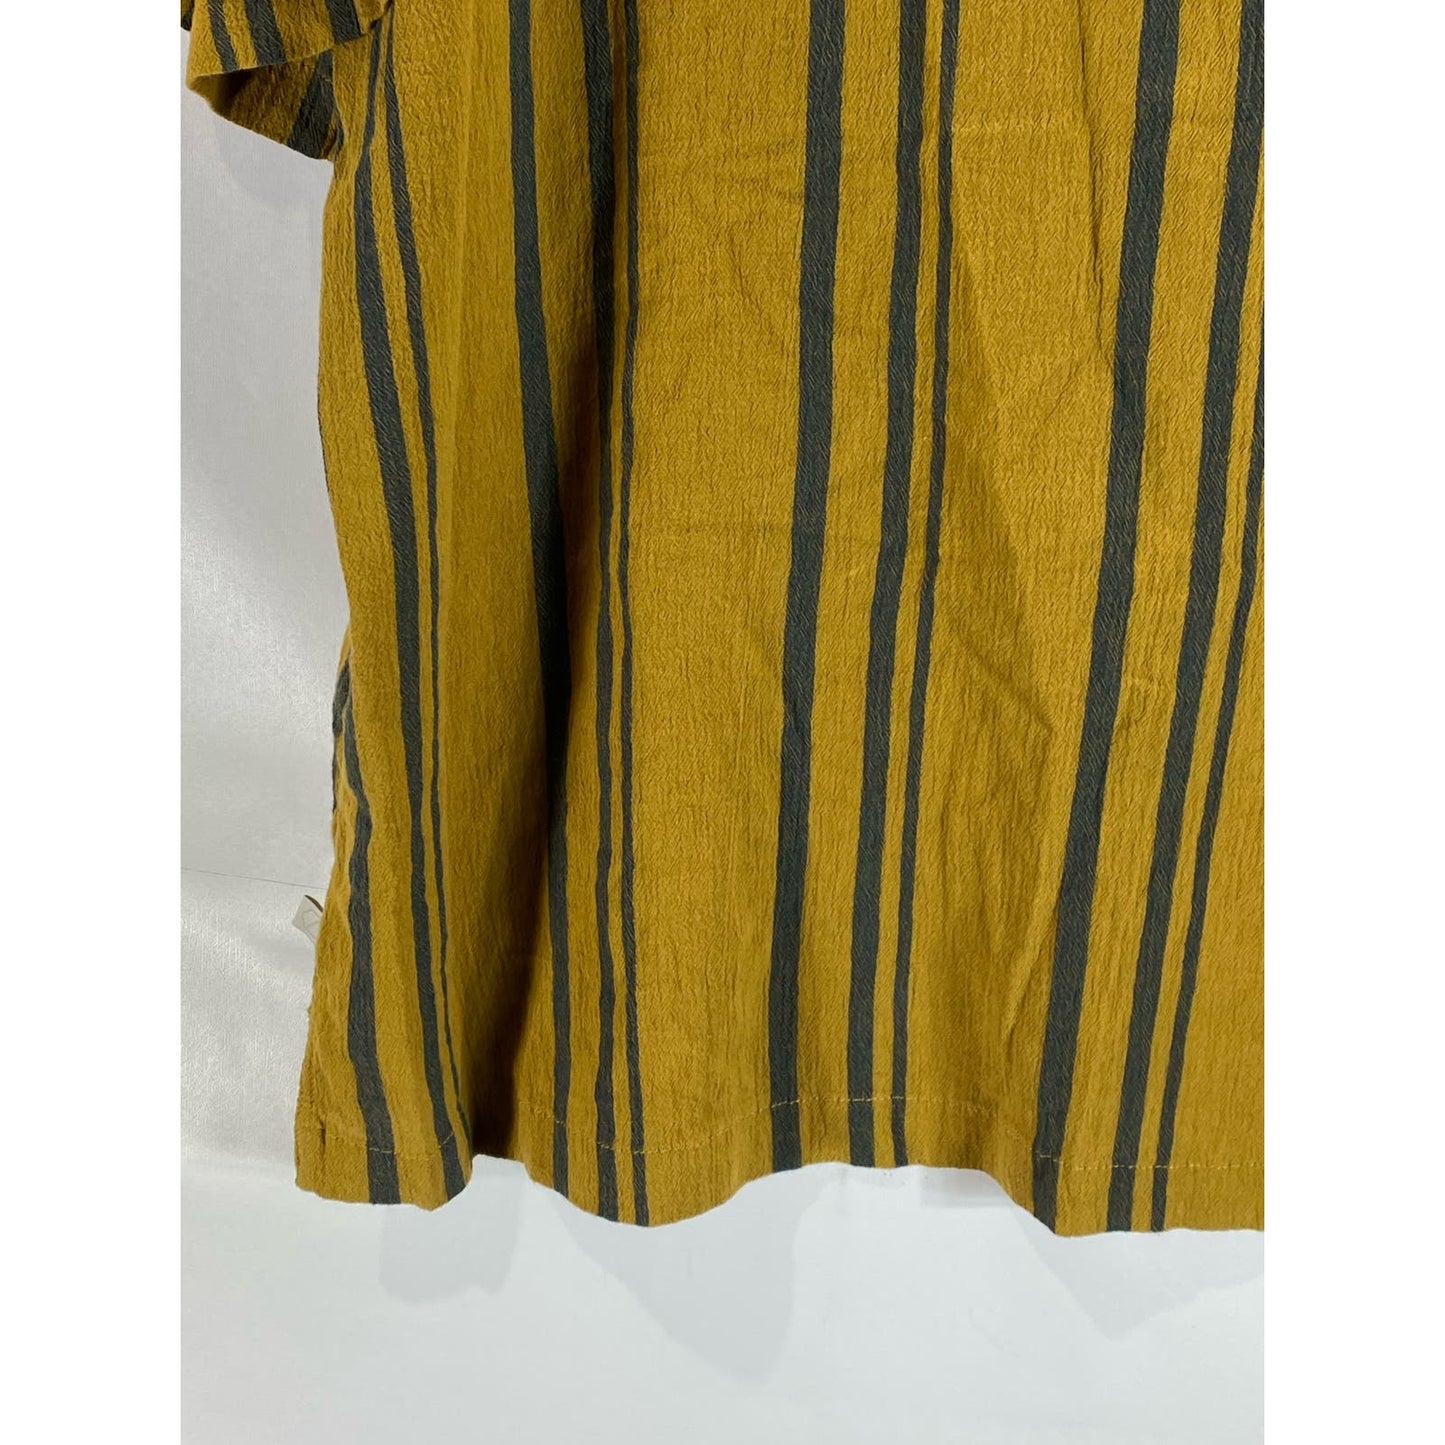 STANDARD CLOTH Men's Yellow Liam Stripe Crinkle Button-Up Shirt SZ XL